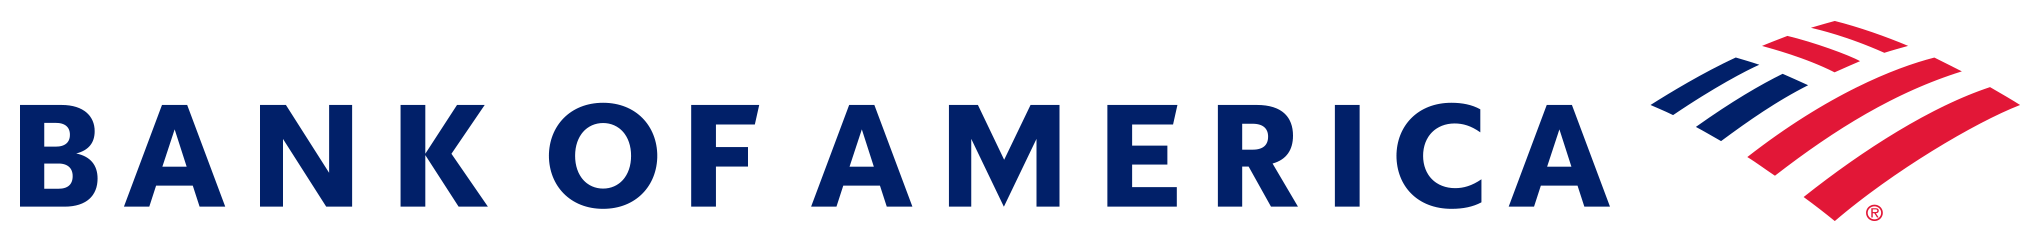 Bank of America Brand Logo